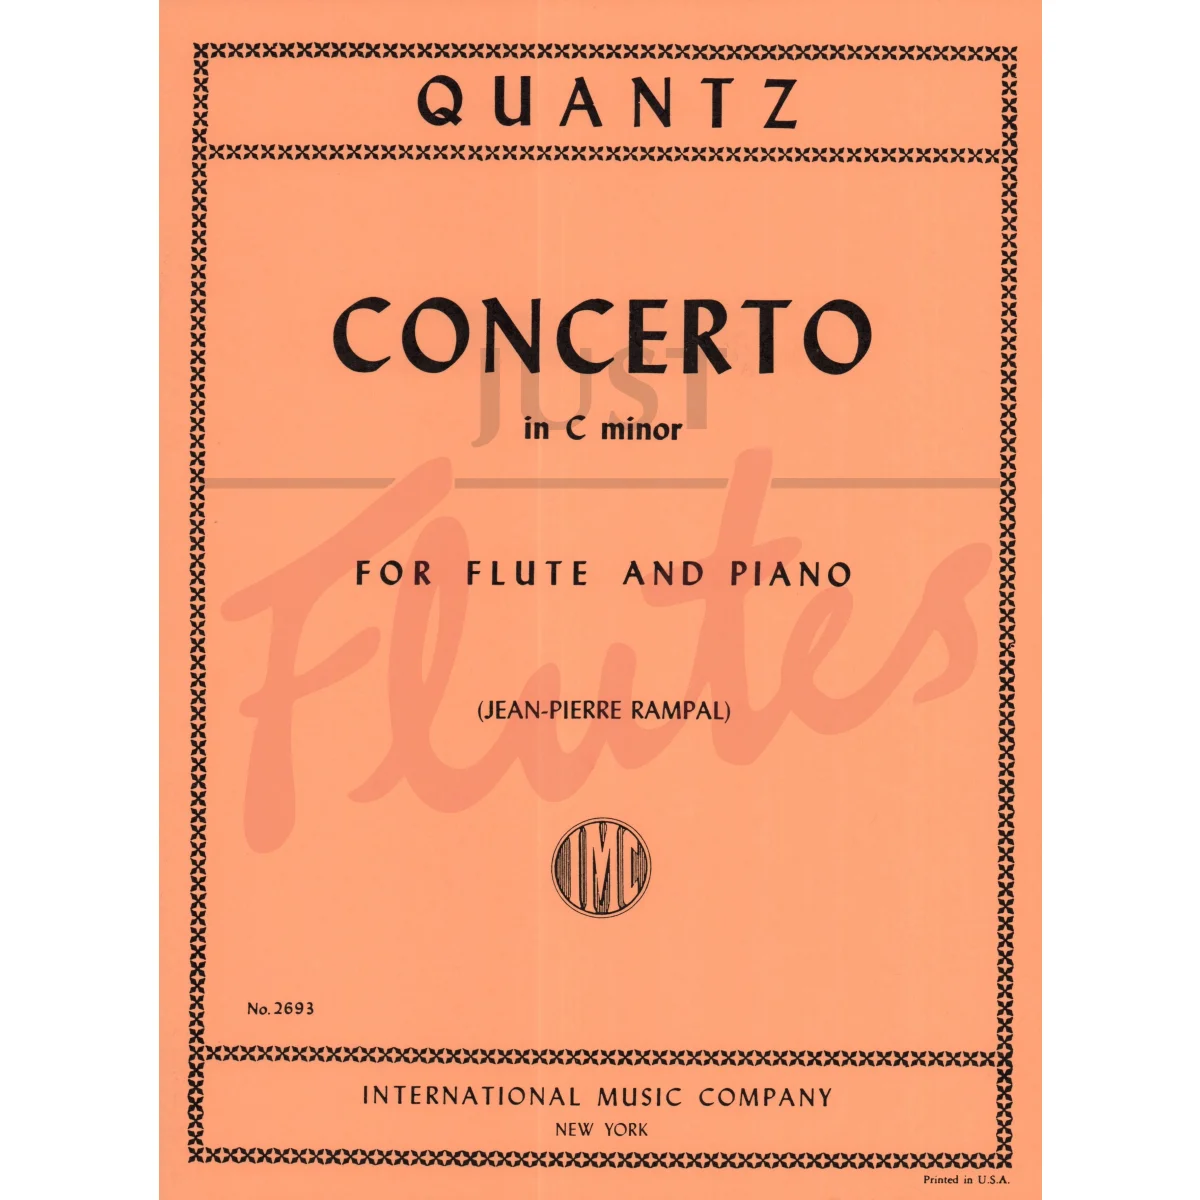 Concerto in C minor for Flute and Piano